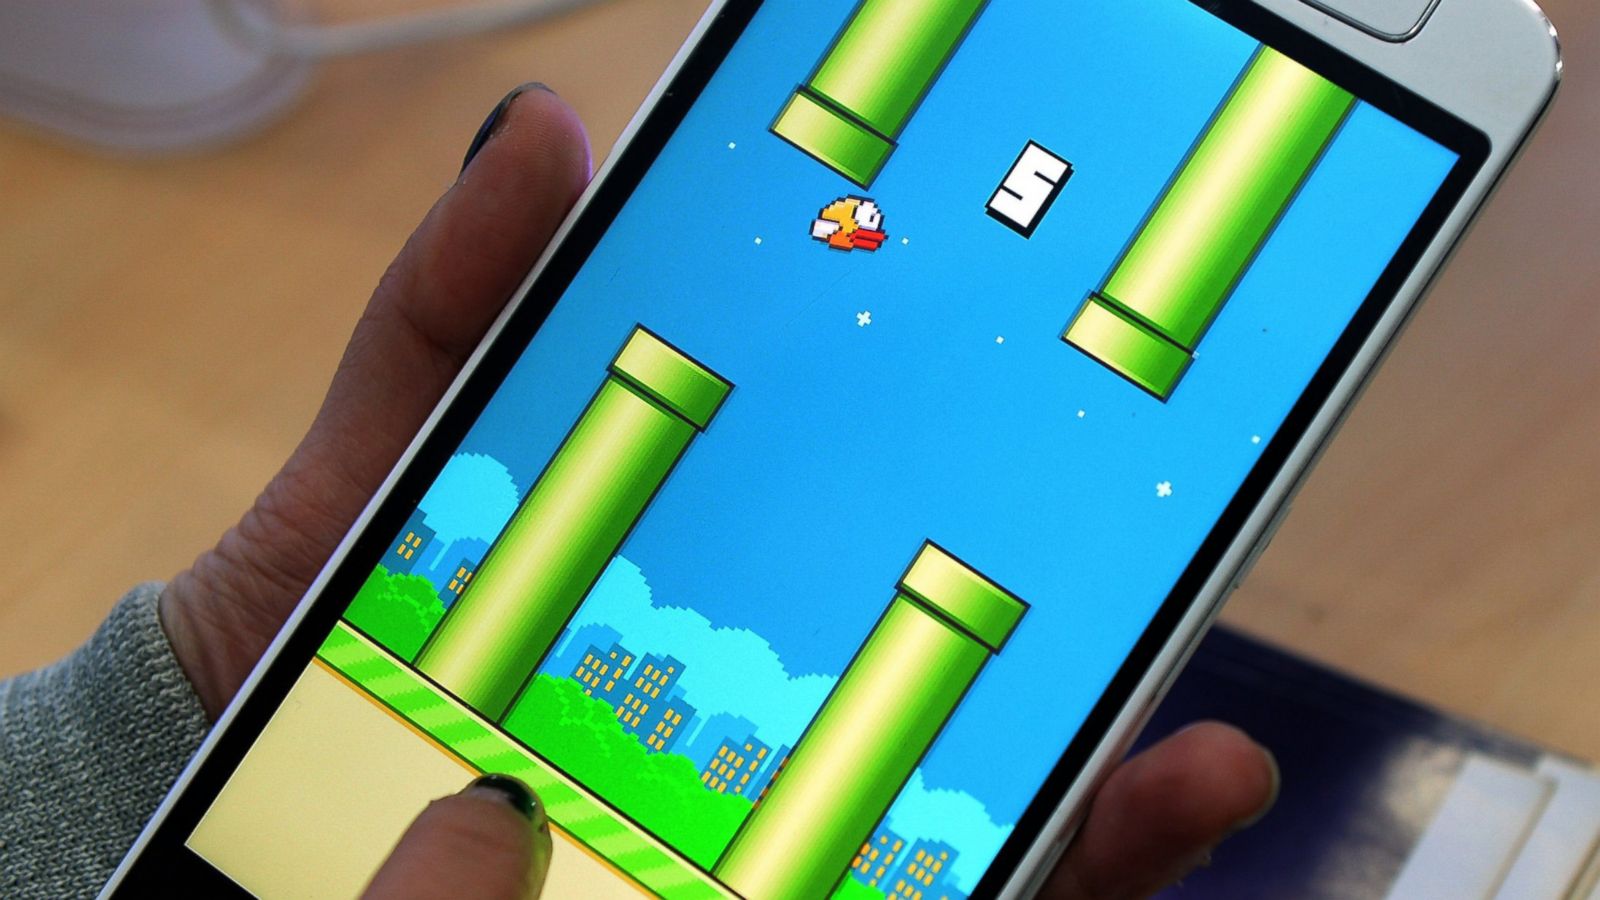 Flappy Bird | iPad Case & Skin